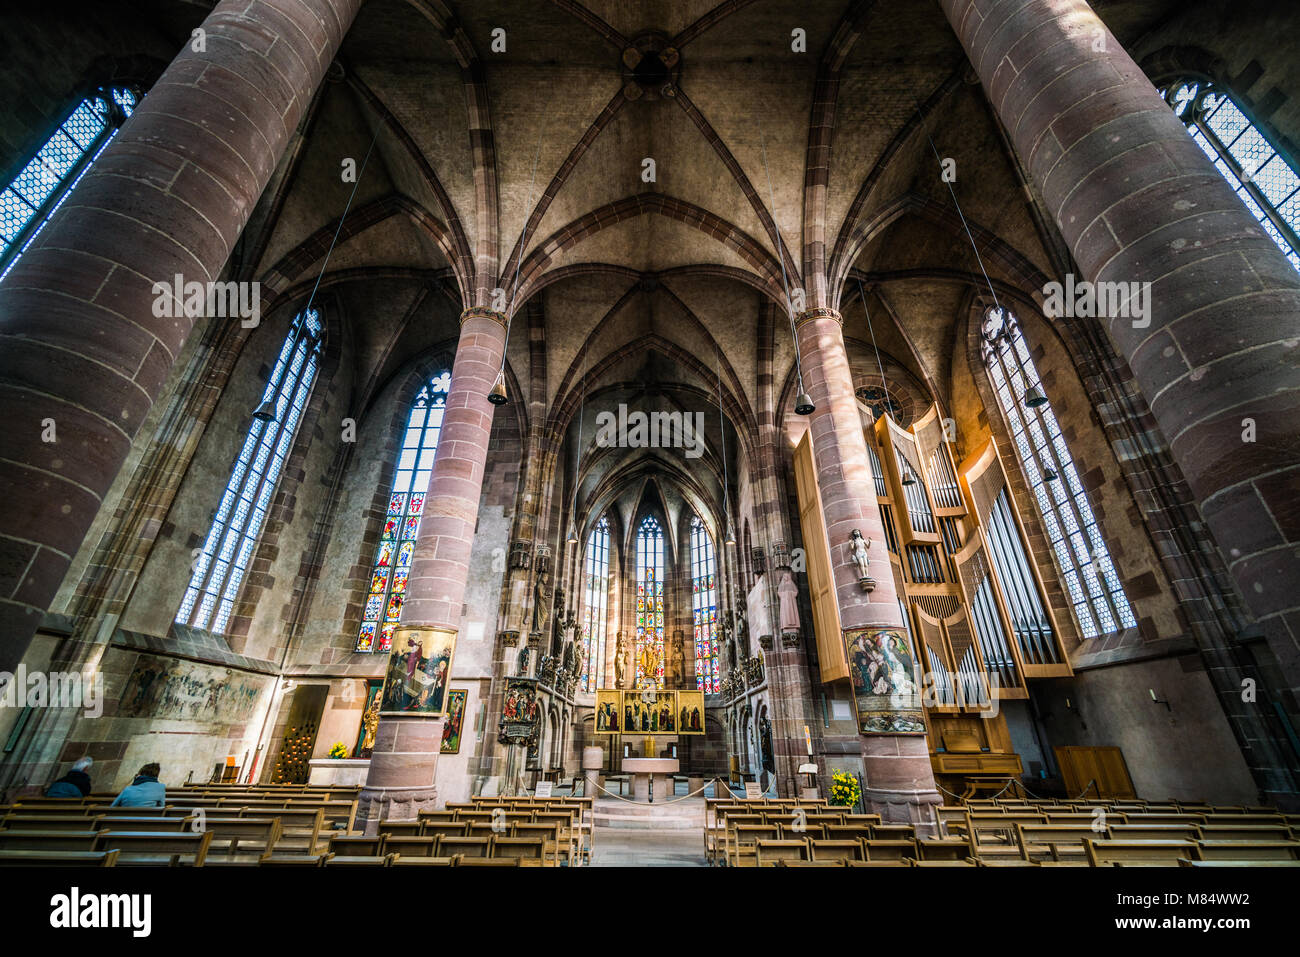 Innenraum der Frauenkirche (Kirche unserer Dame), Nürnberg, Deutschland, Europa. Stockfoto